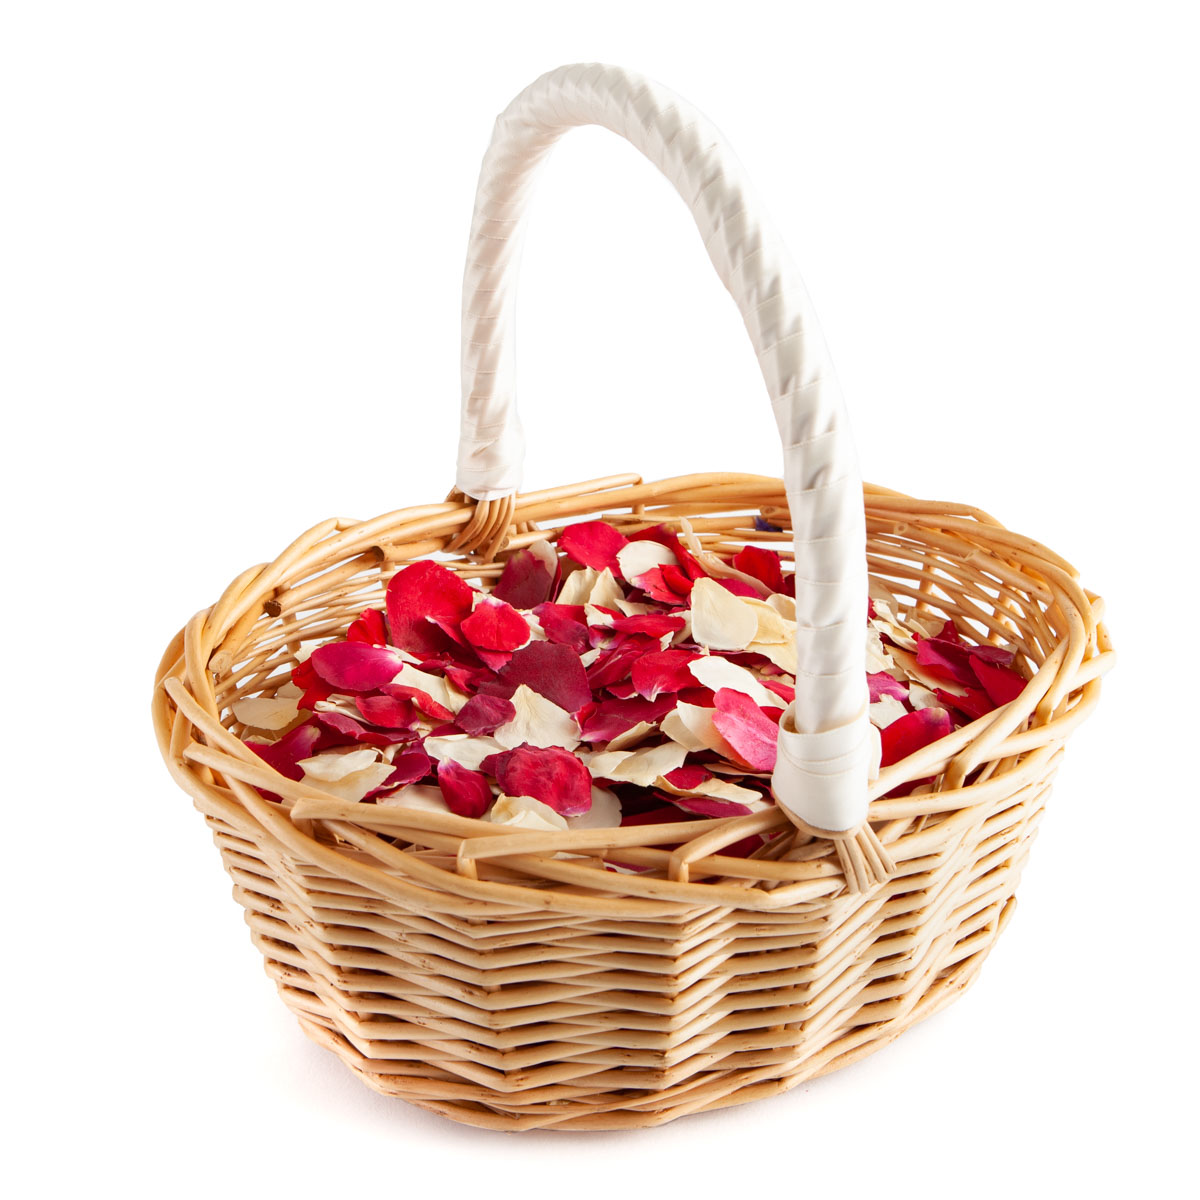 Red & Cream Rose Petals - Biodegradable Confetti - Real Flower Petal Confetti - Basket